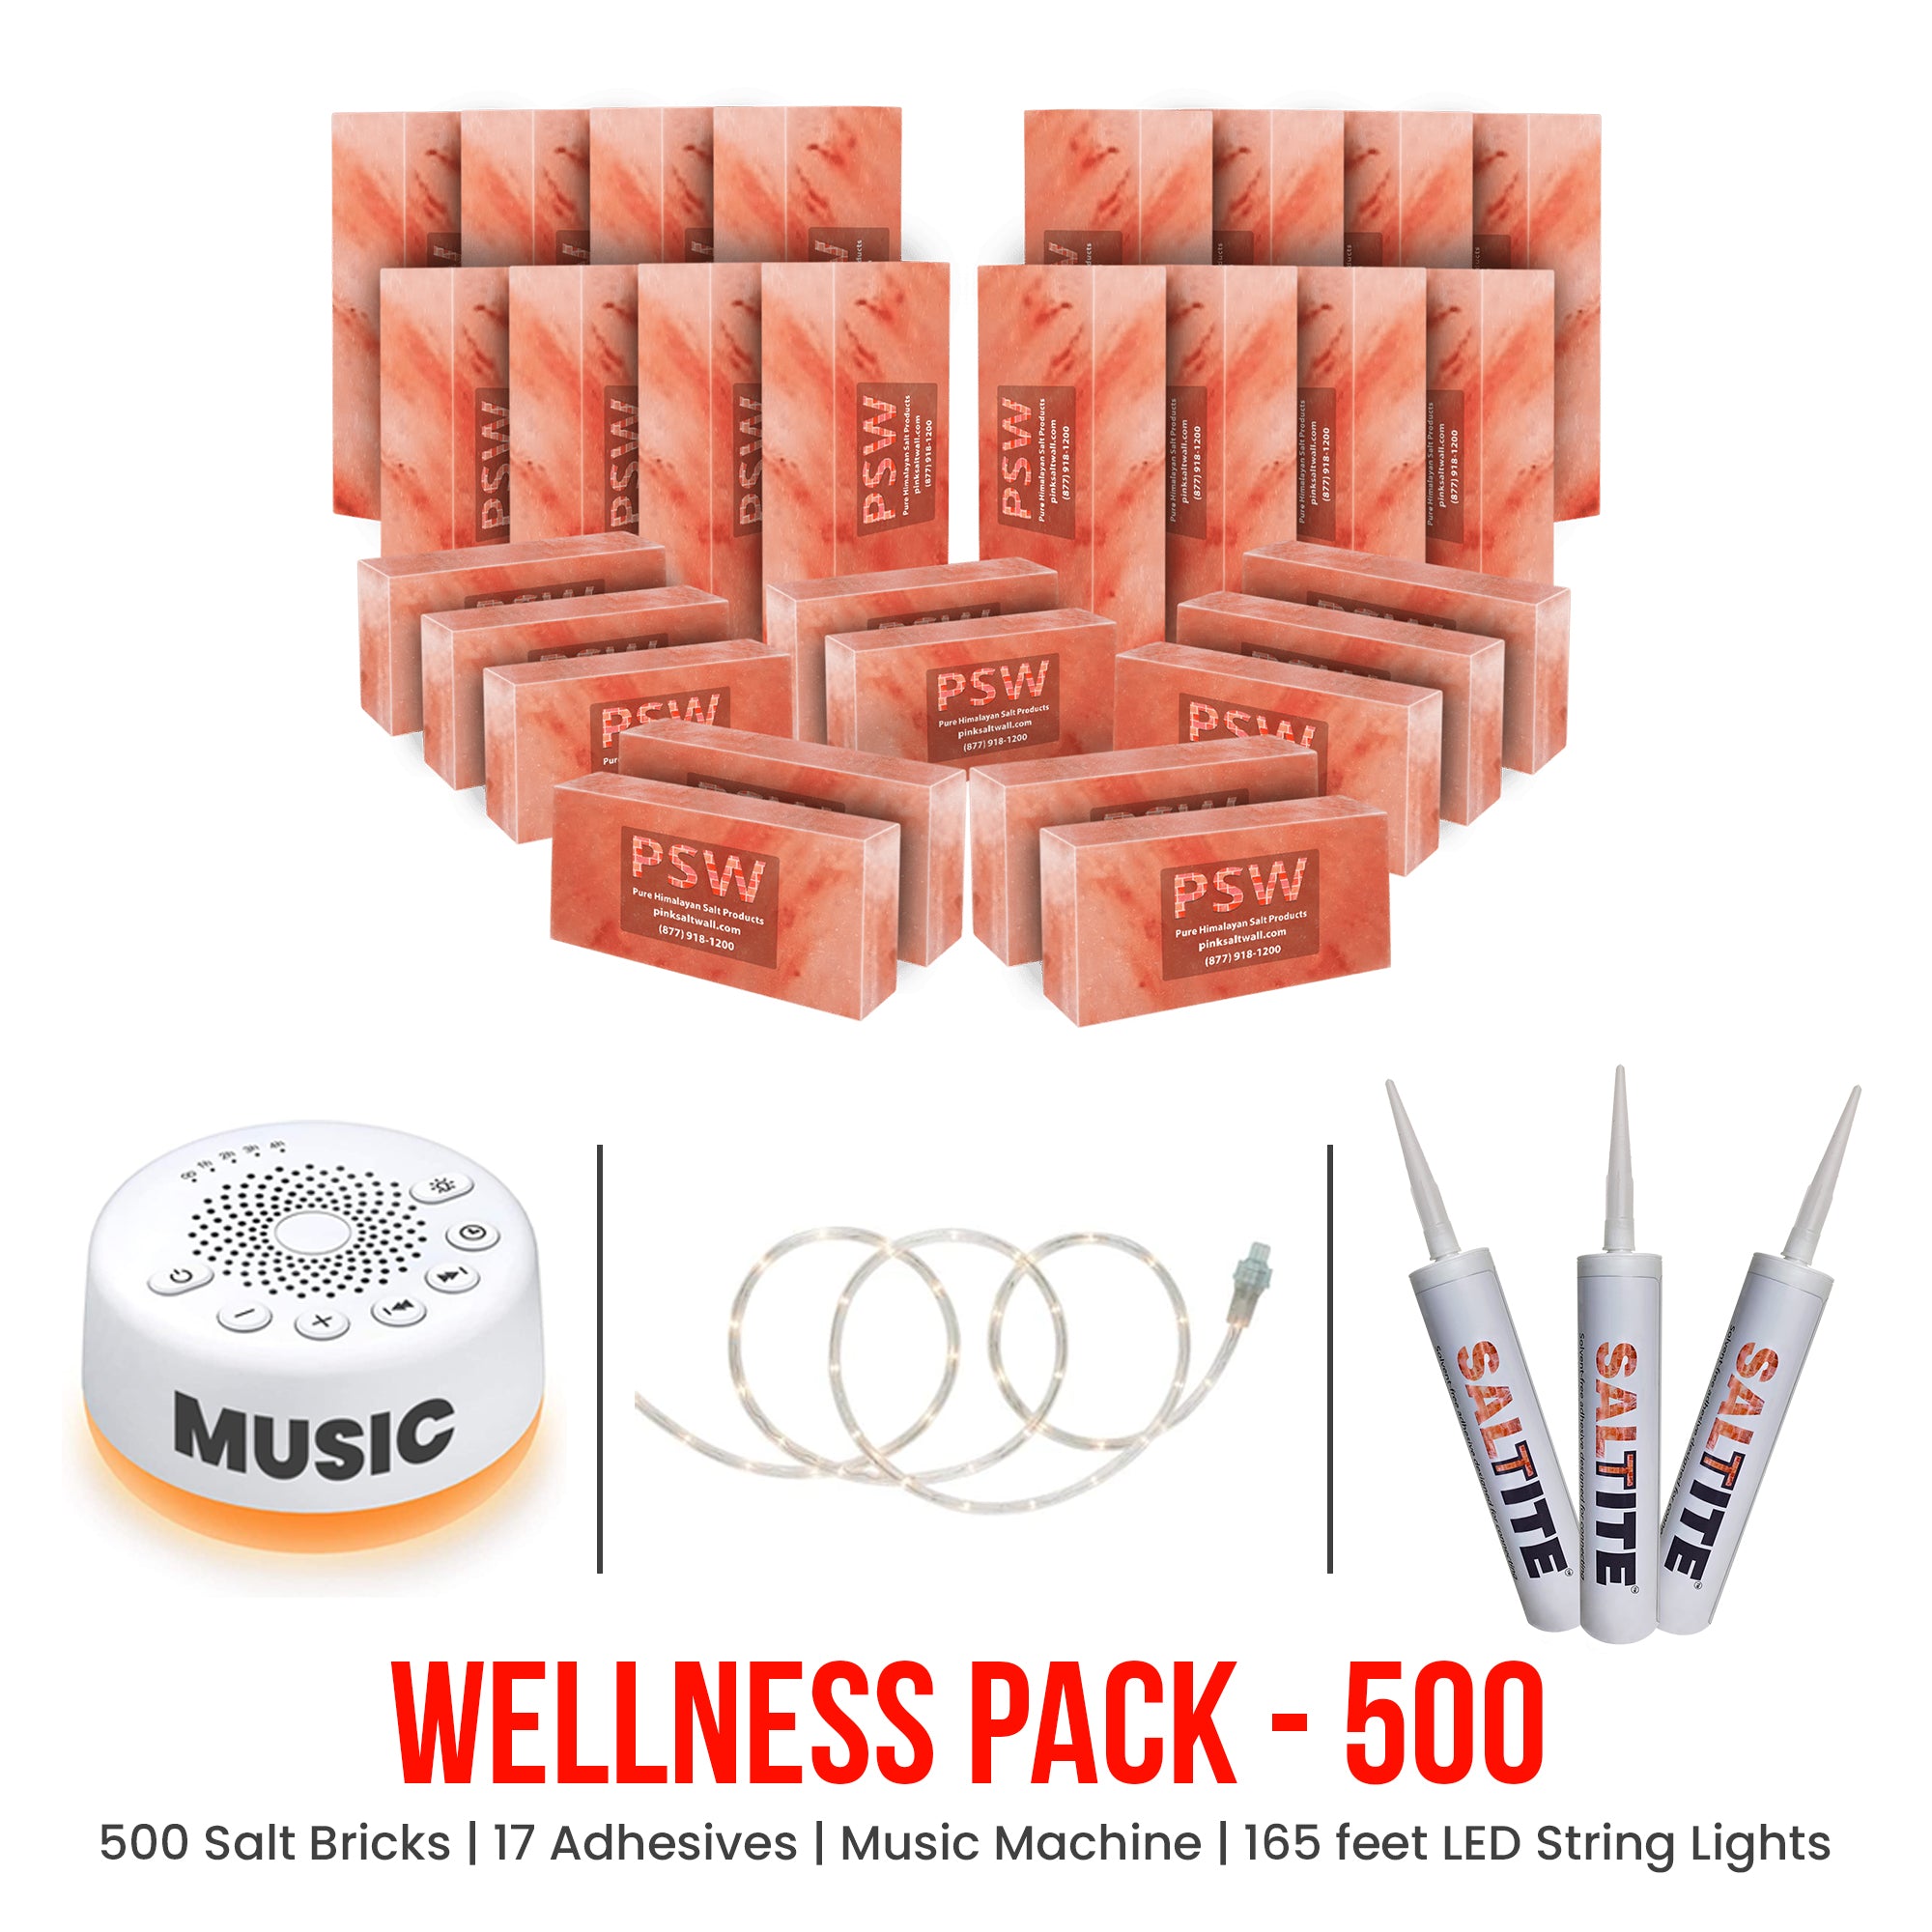 Wellness Pack - 500